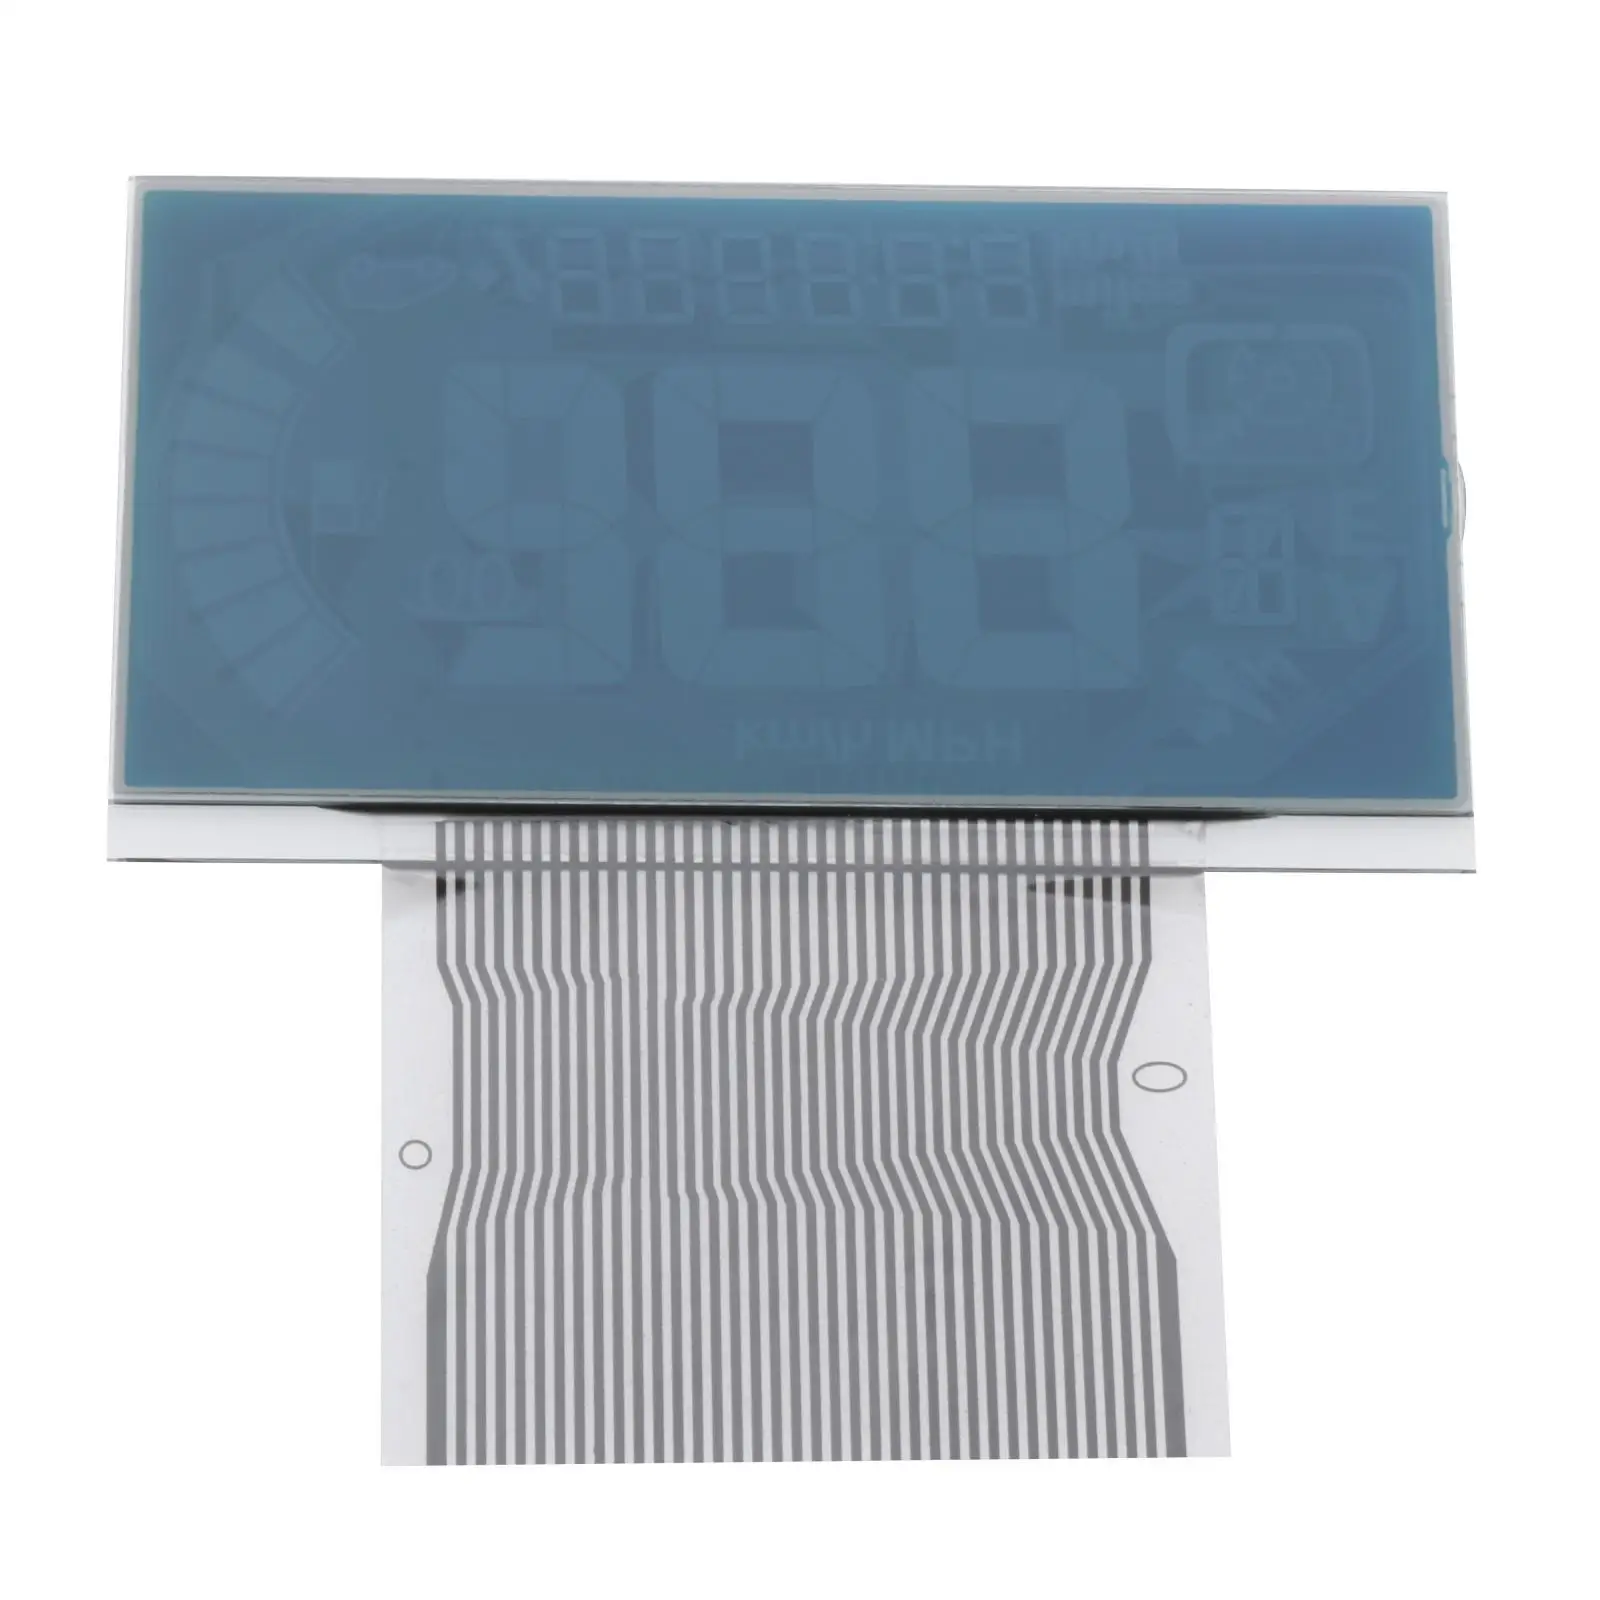 Dashboard LCD Display Instrument   MK2 Combi Direct Replaces Premium High 